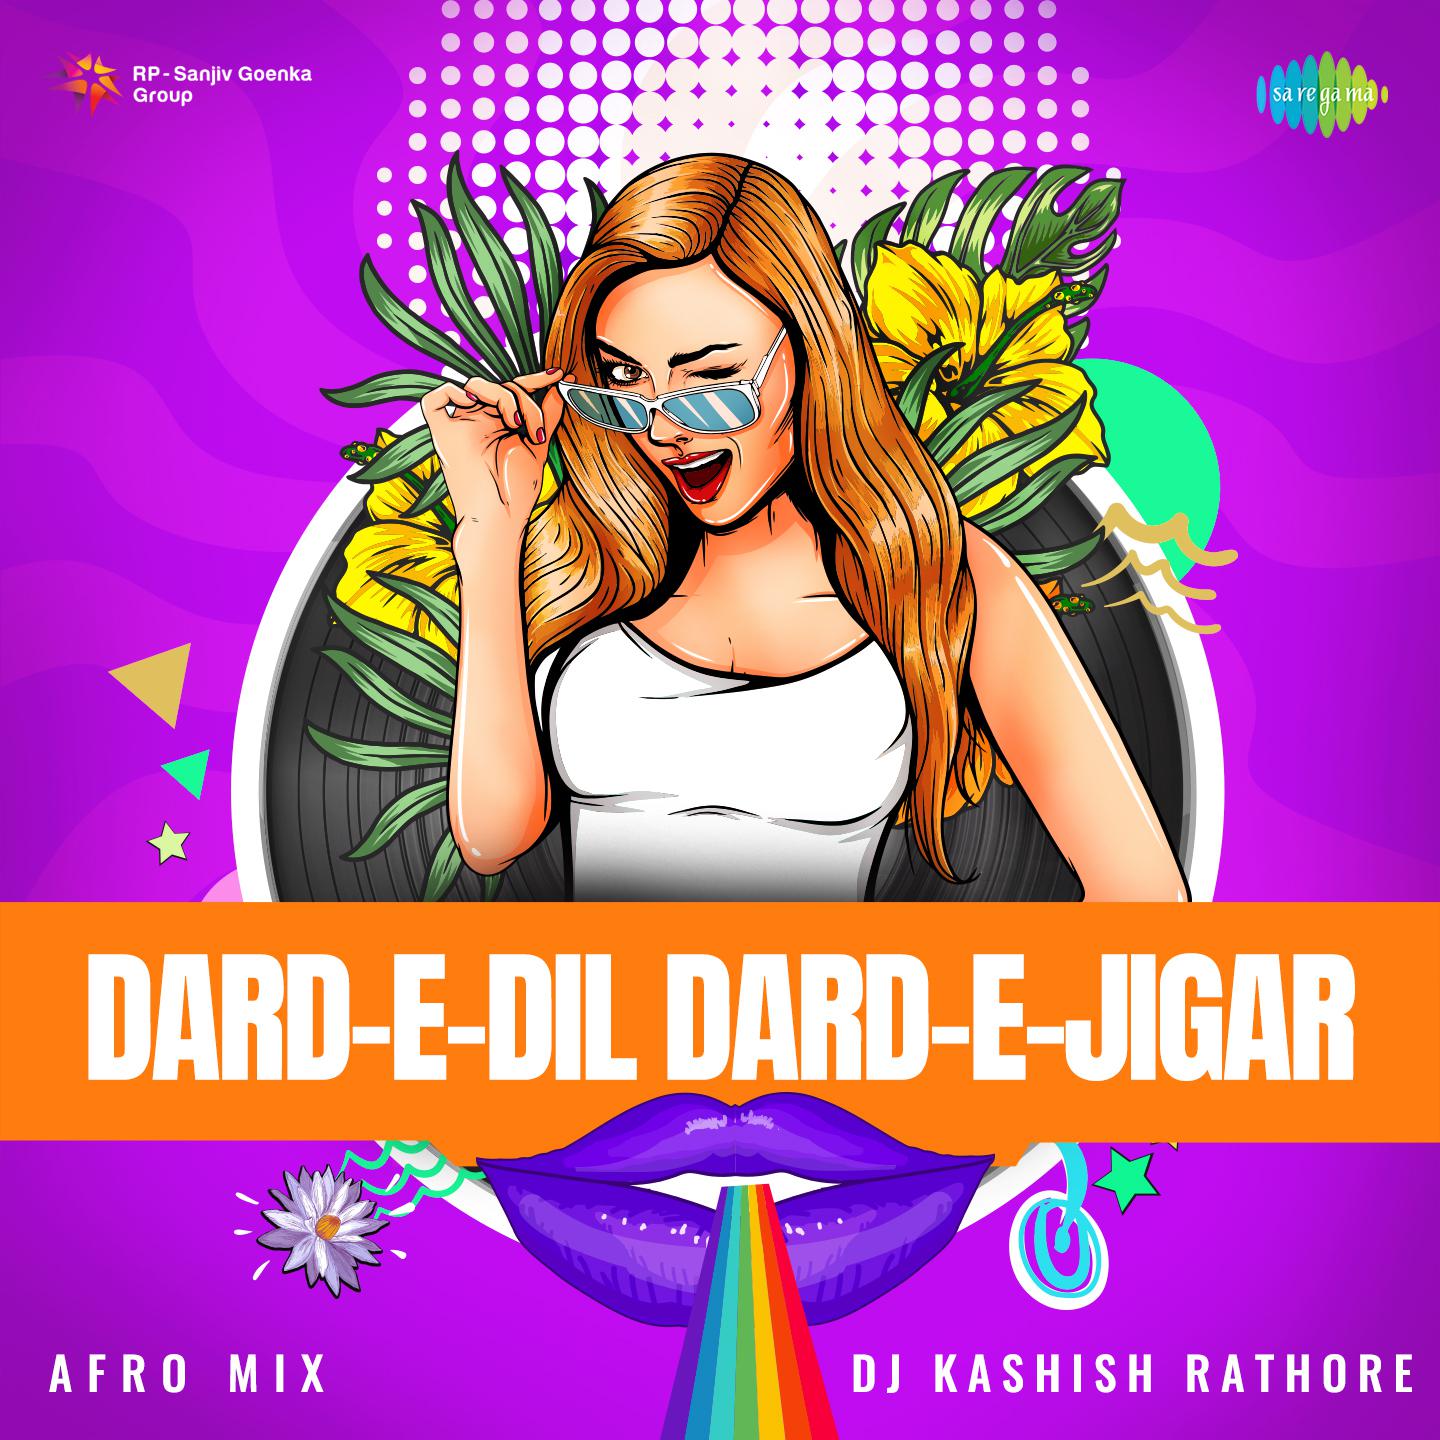 DJ Kashish Rathore - Dard-E-Dil Dard-E-Jigar - Afro Mix